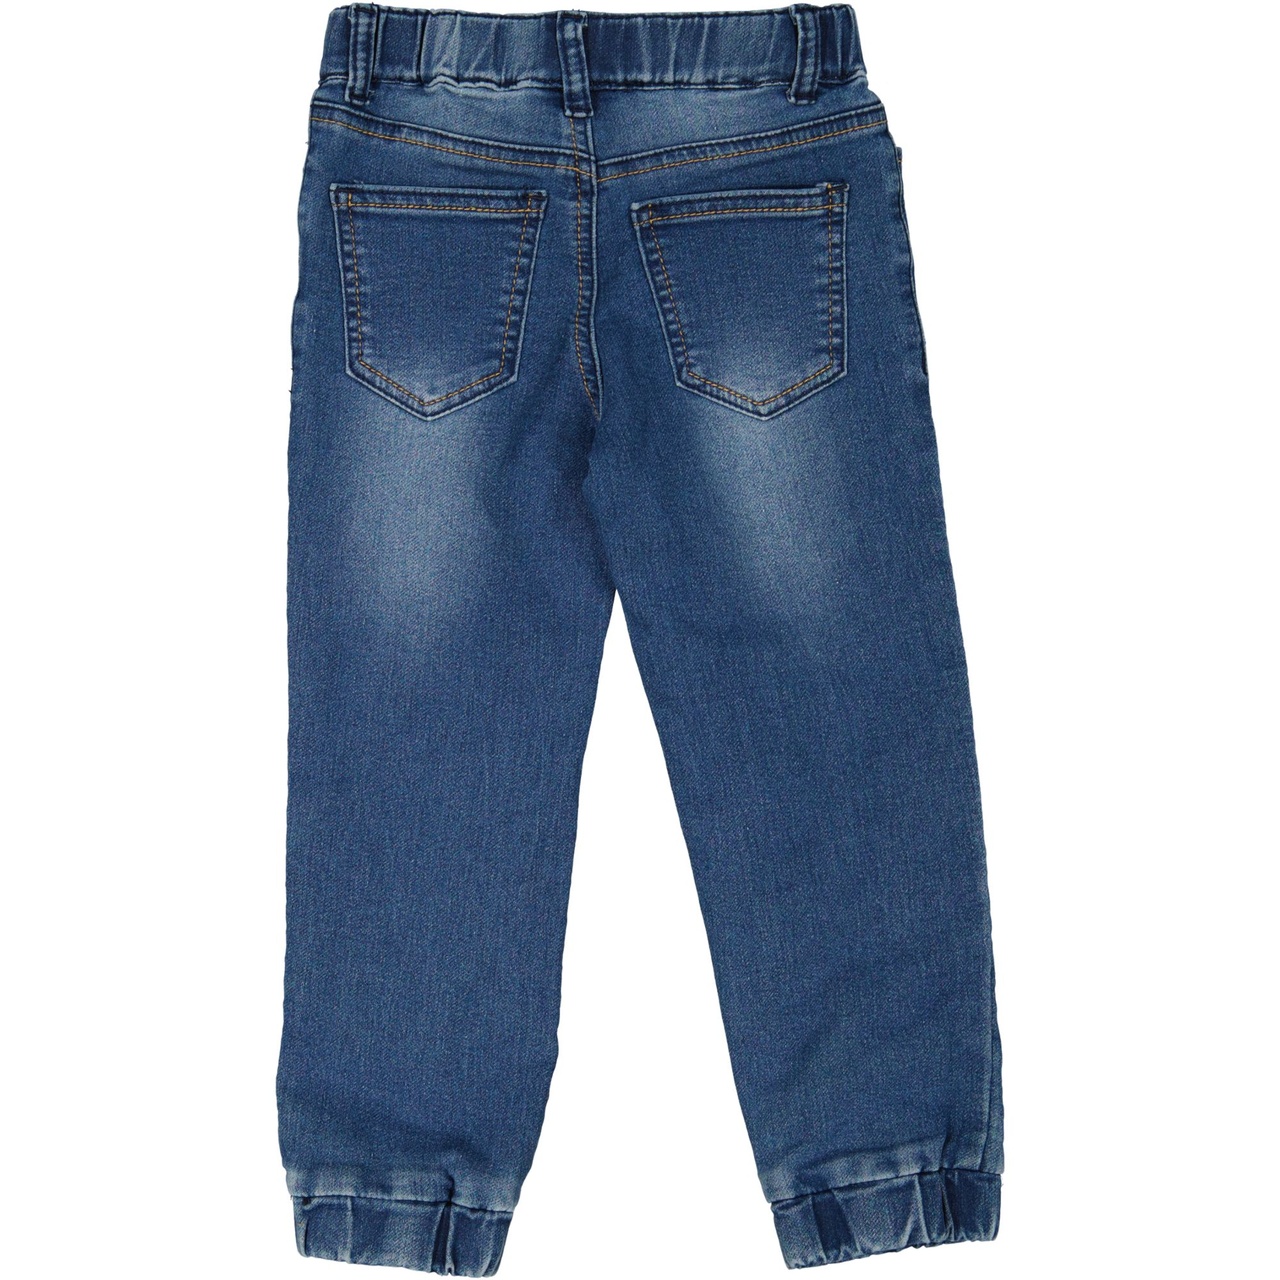 Unisex soft jeans Denim blue wash 74/80